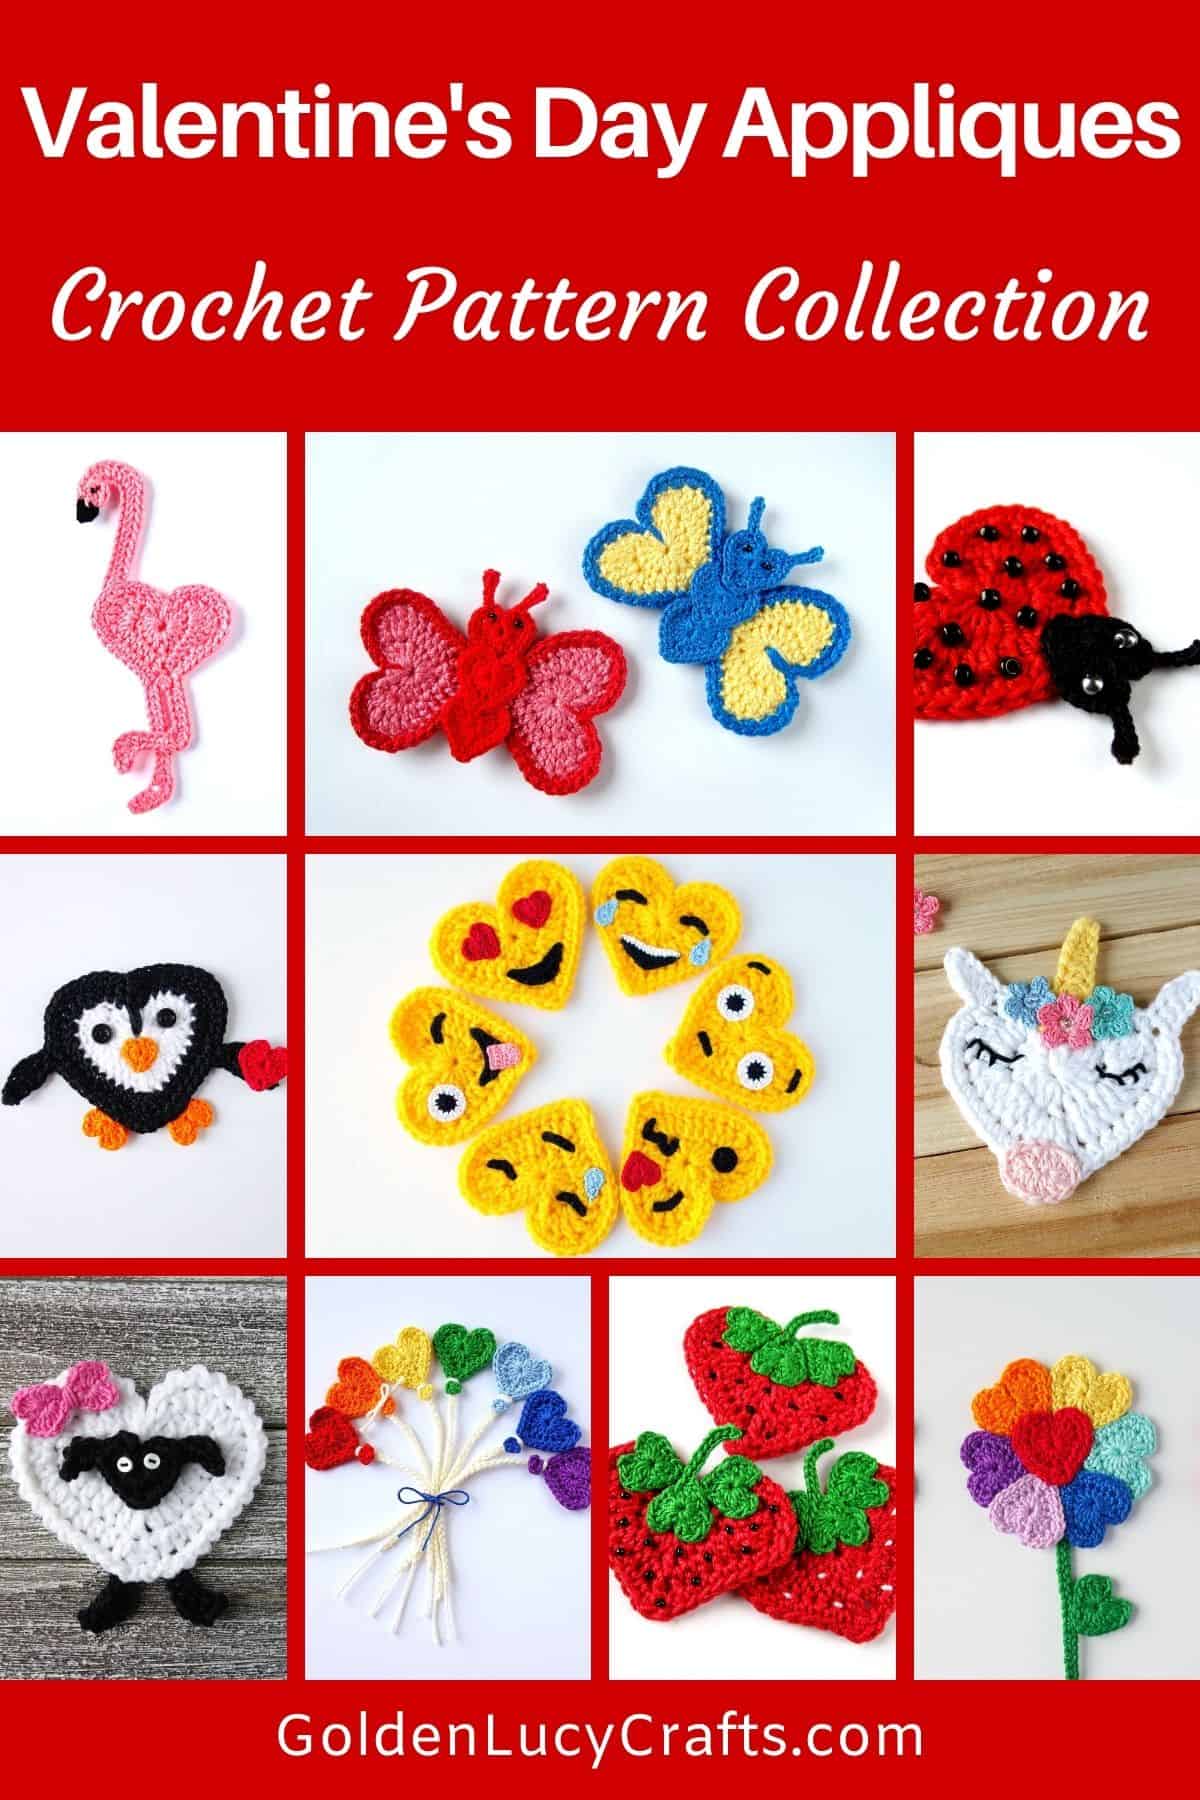 Valentine's Day crochet appliques picture collage.